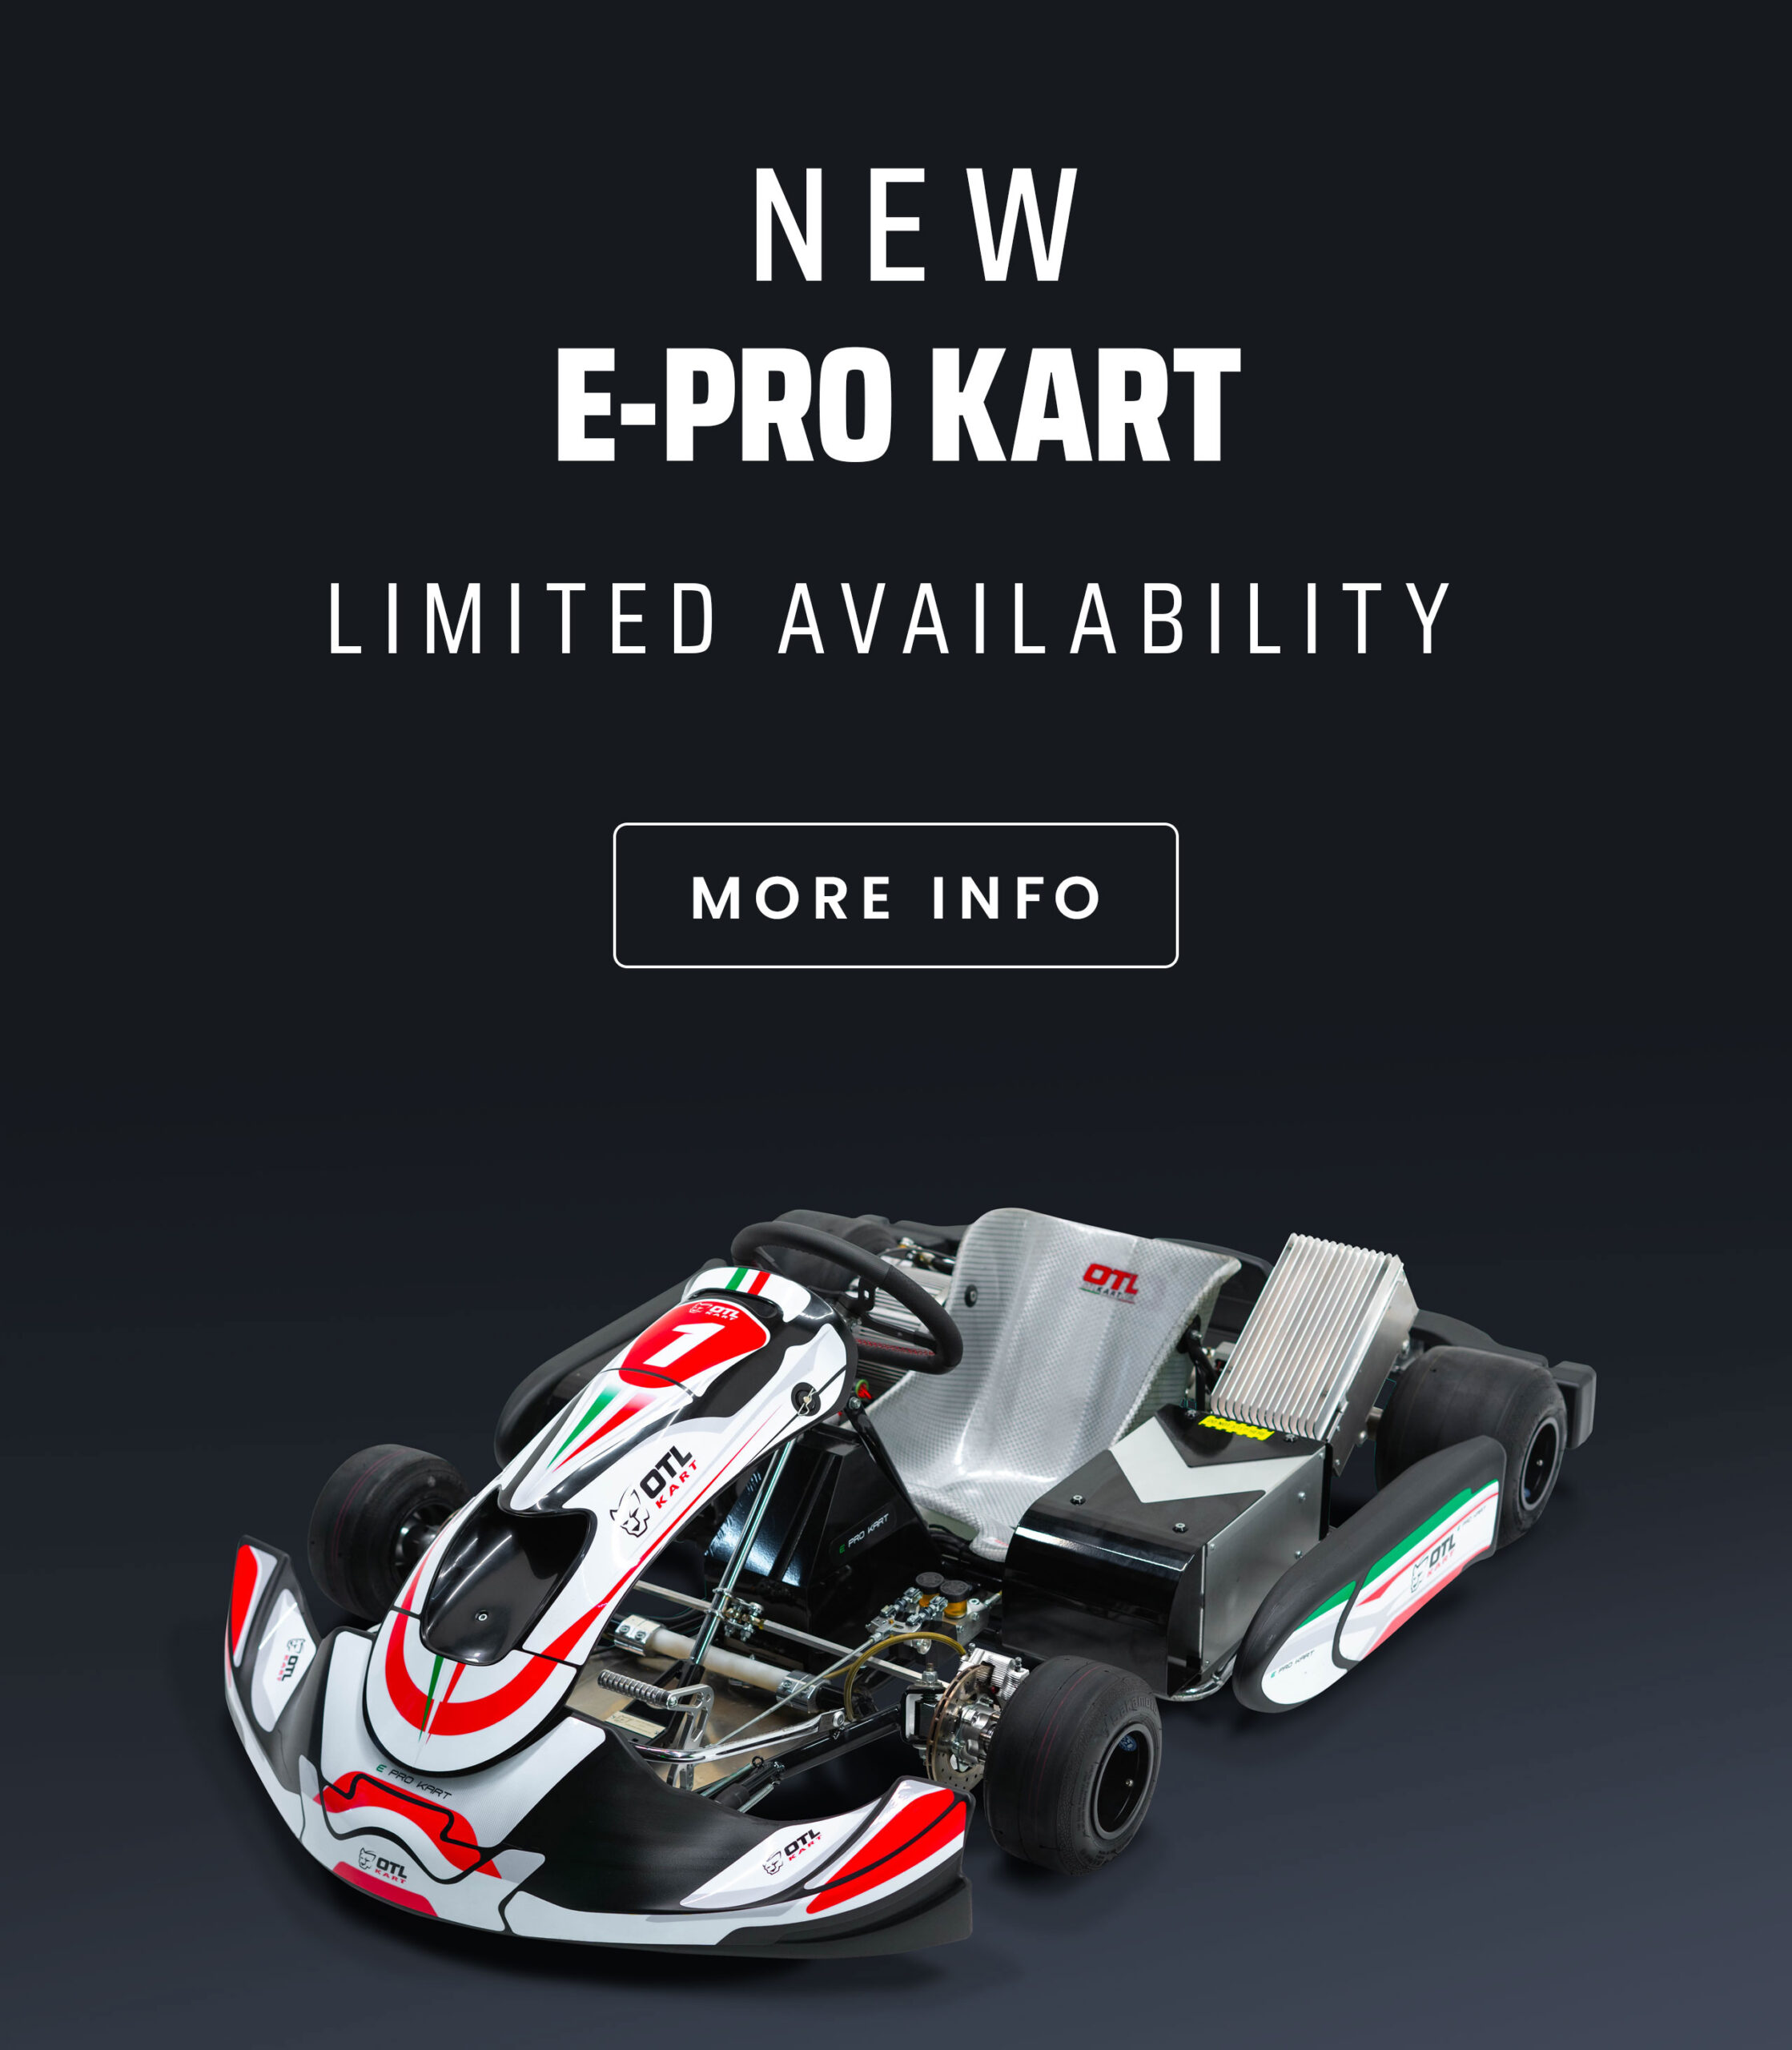 E-Pro Kart Limited Availability